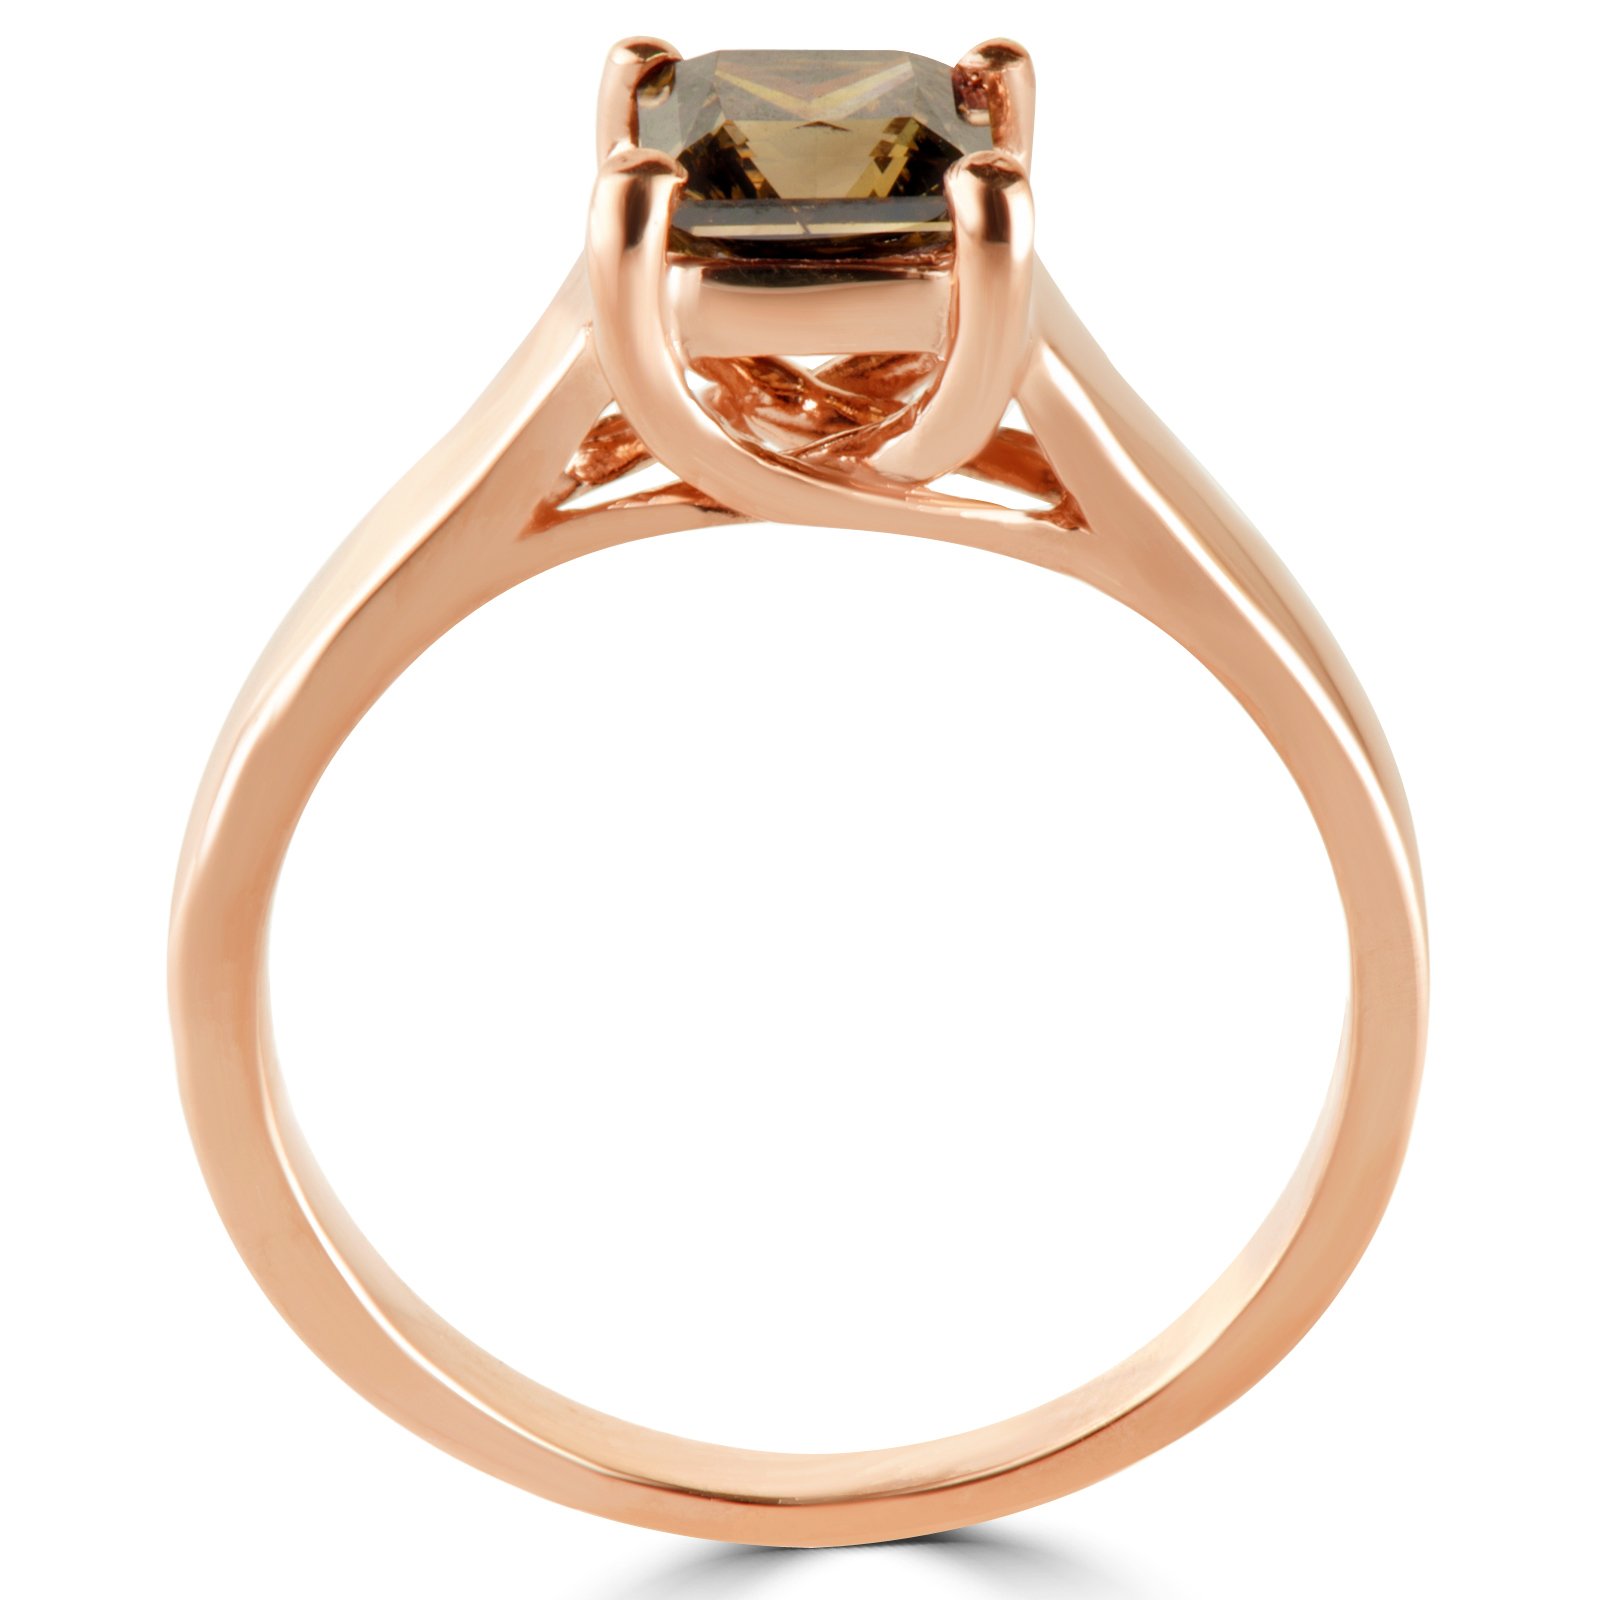 .70 CT SI PRINCESS CUT CHAMPAGNE DIAMOND ENGAGEMENT RING 14K ROSE GOLD | eBay